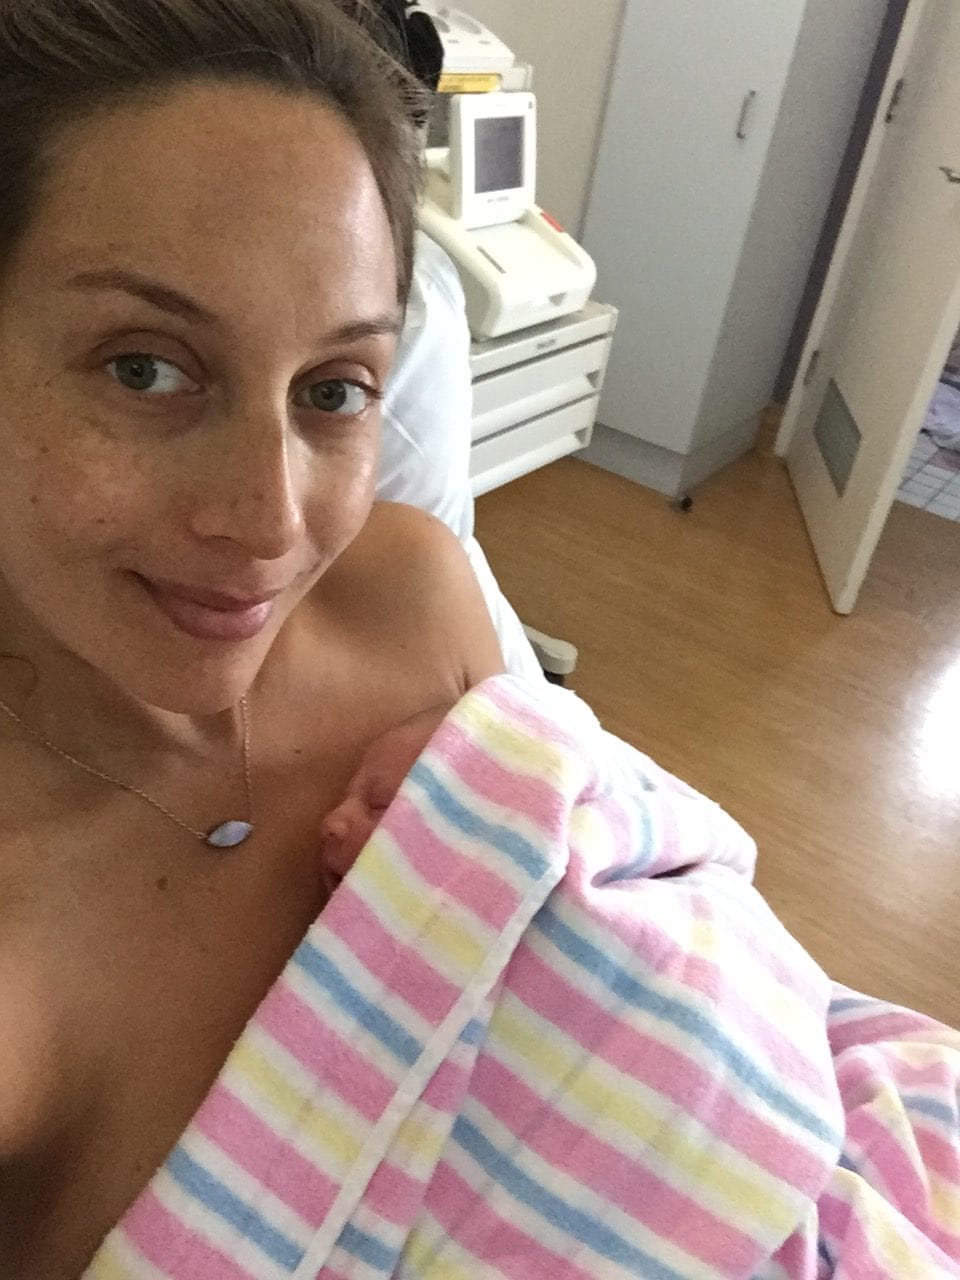 Alexi Willemsen holding her baby